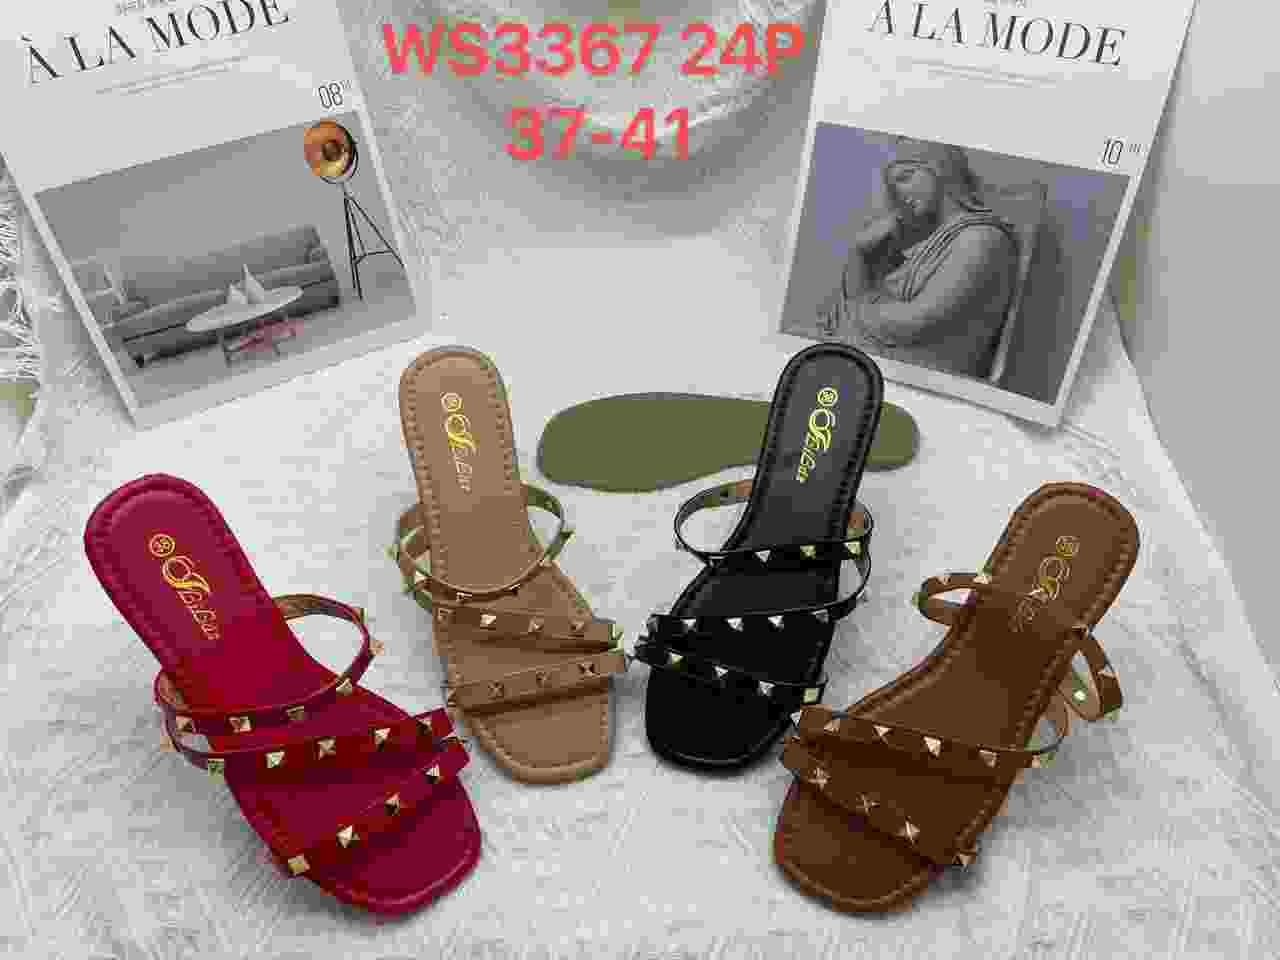 Ladies stylish Sandal shoes WS3367 24P